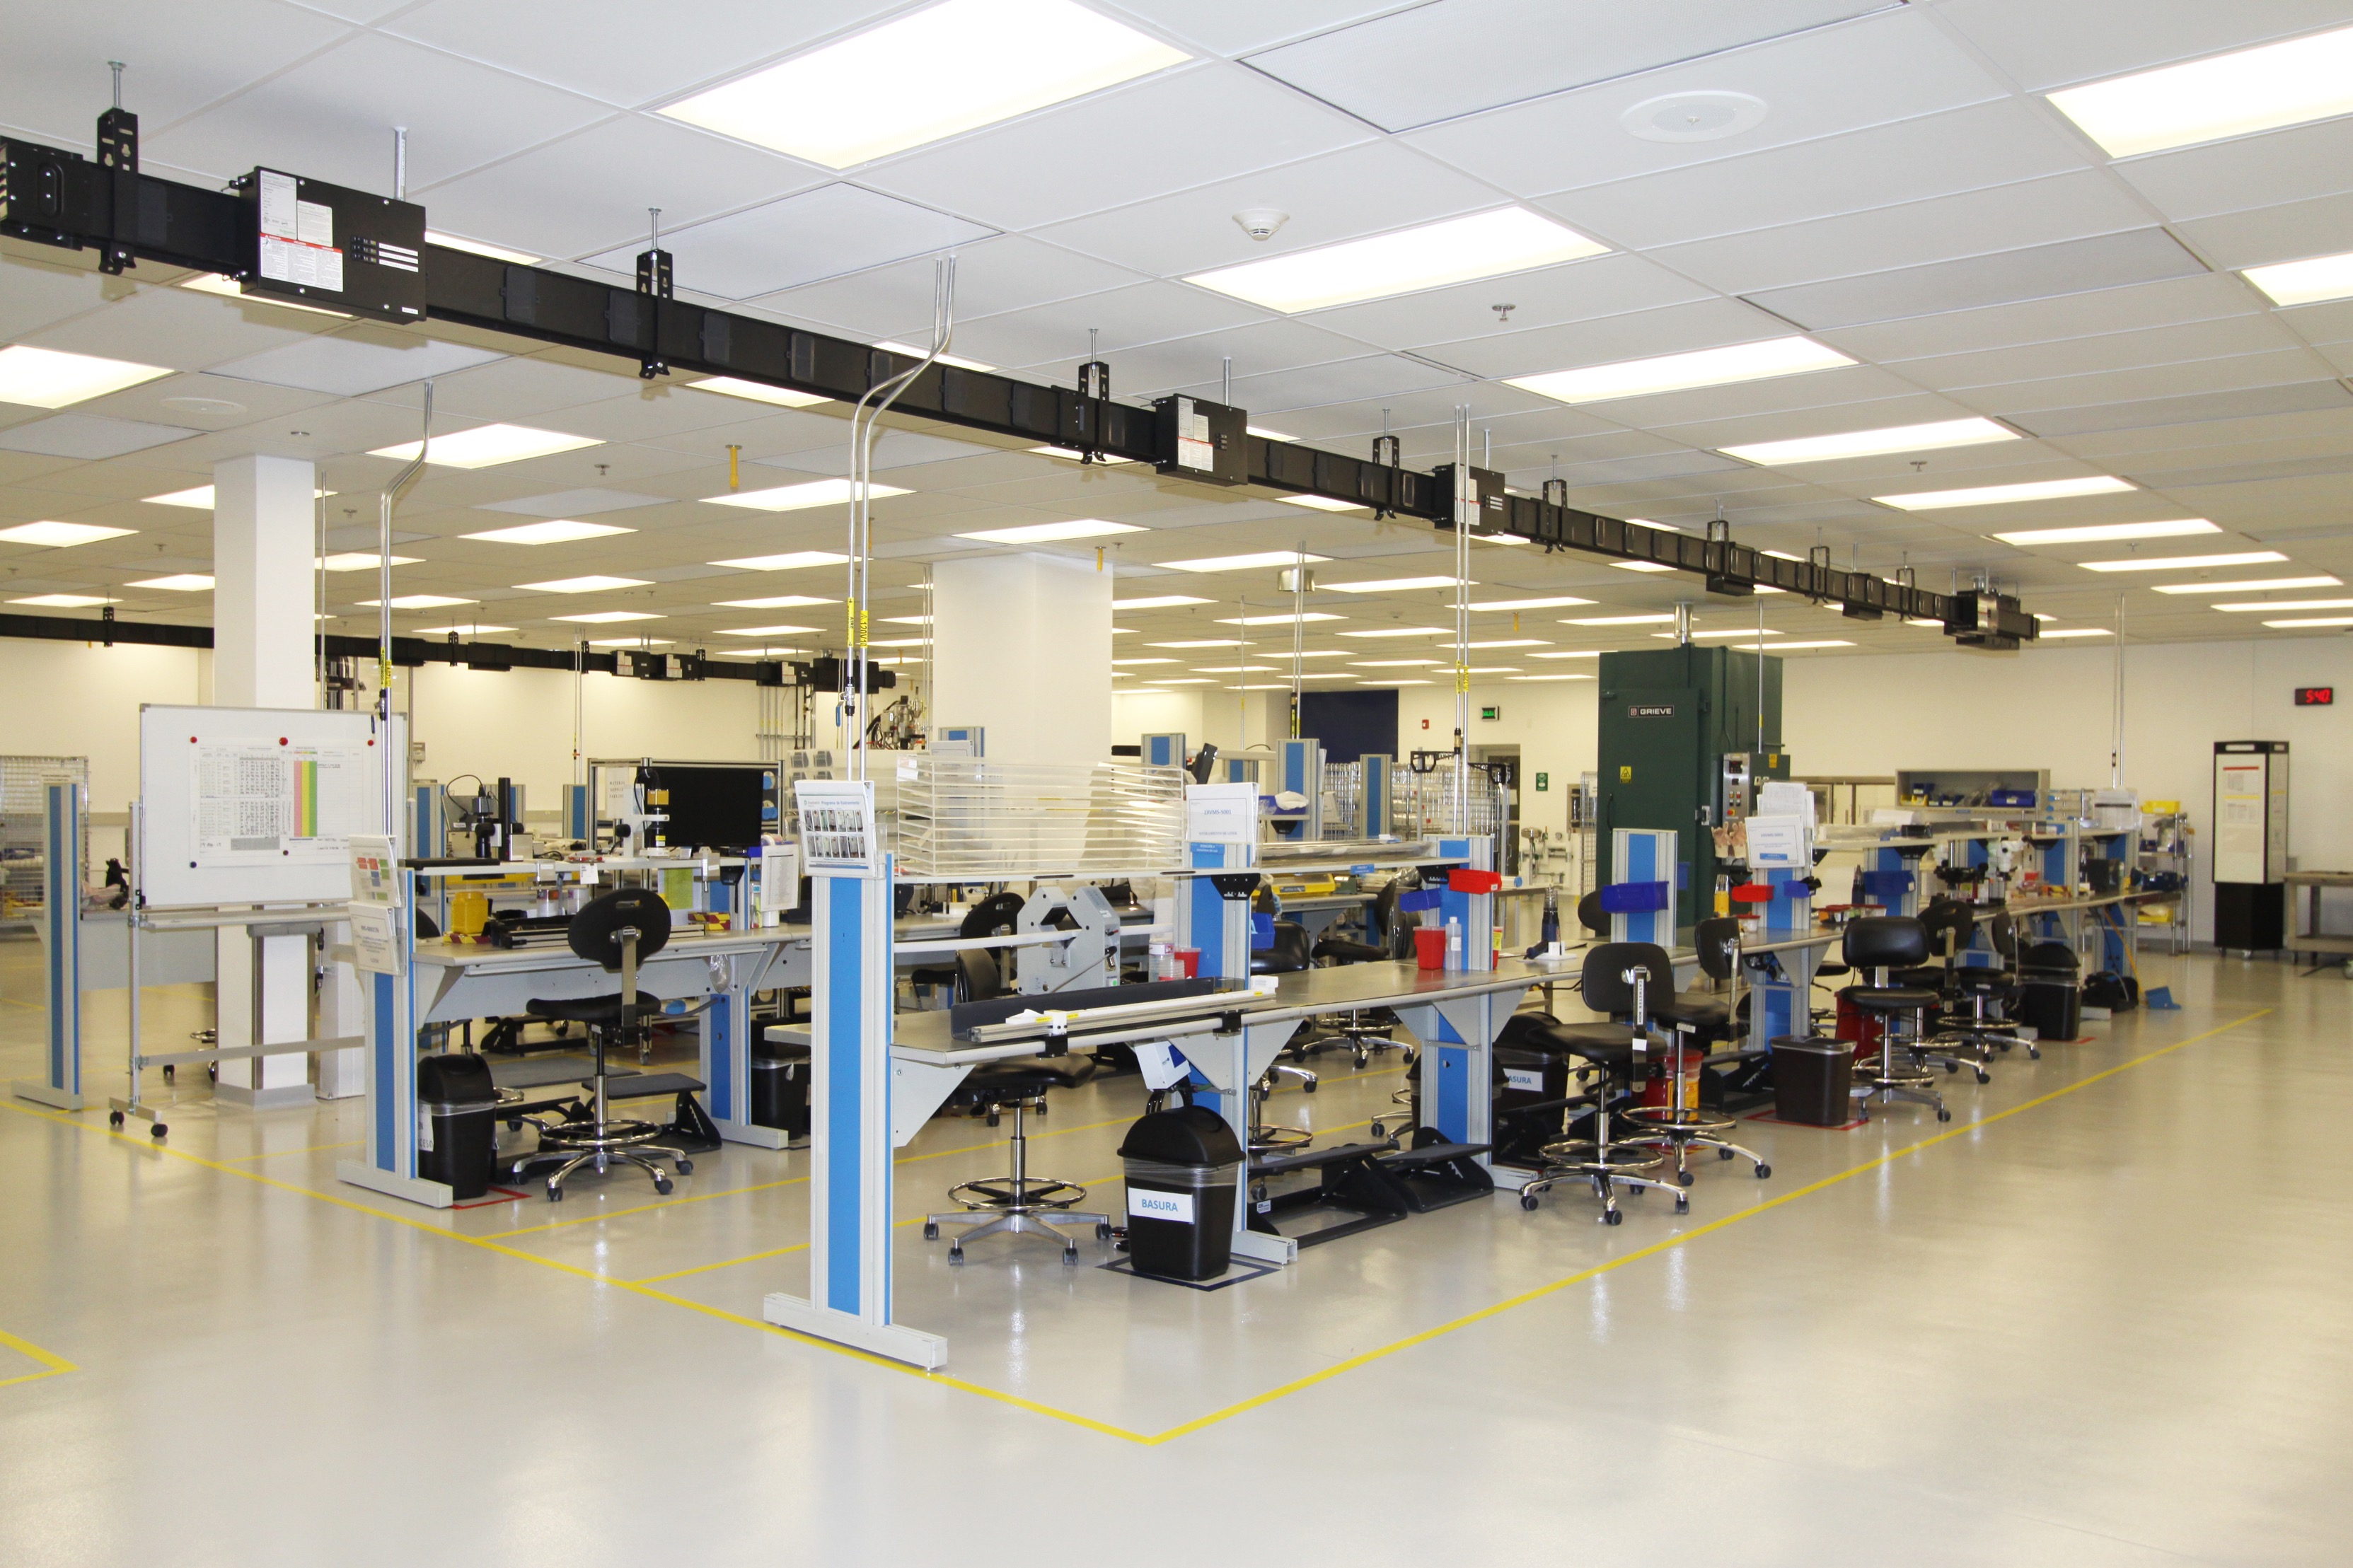 Integer – Portable Medical Device Development & Manufacturing Center